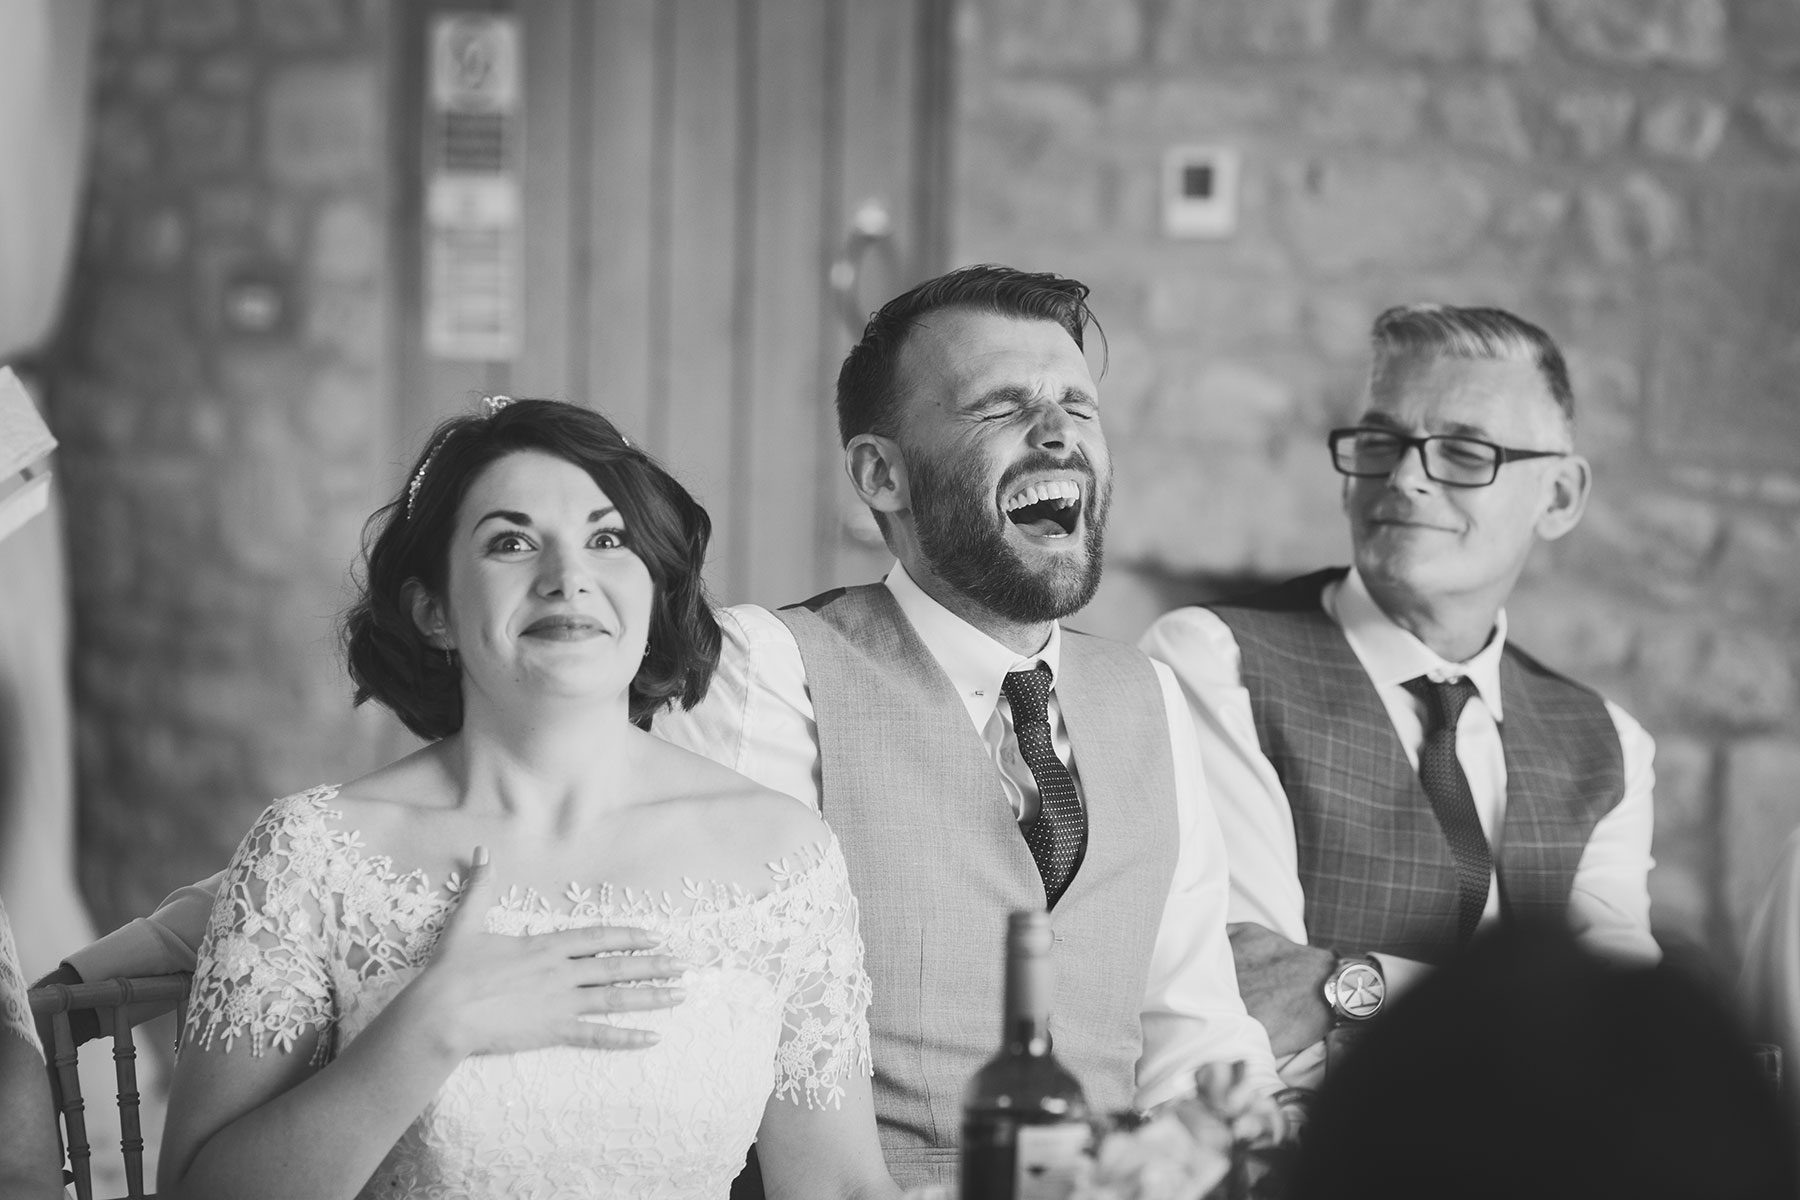 Should I laugh? - Reportage Wedding at Upcote Barn | Bullit